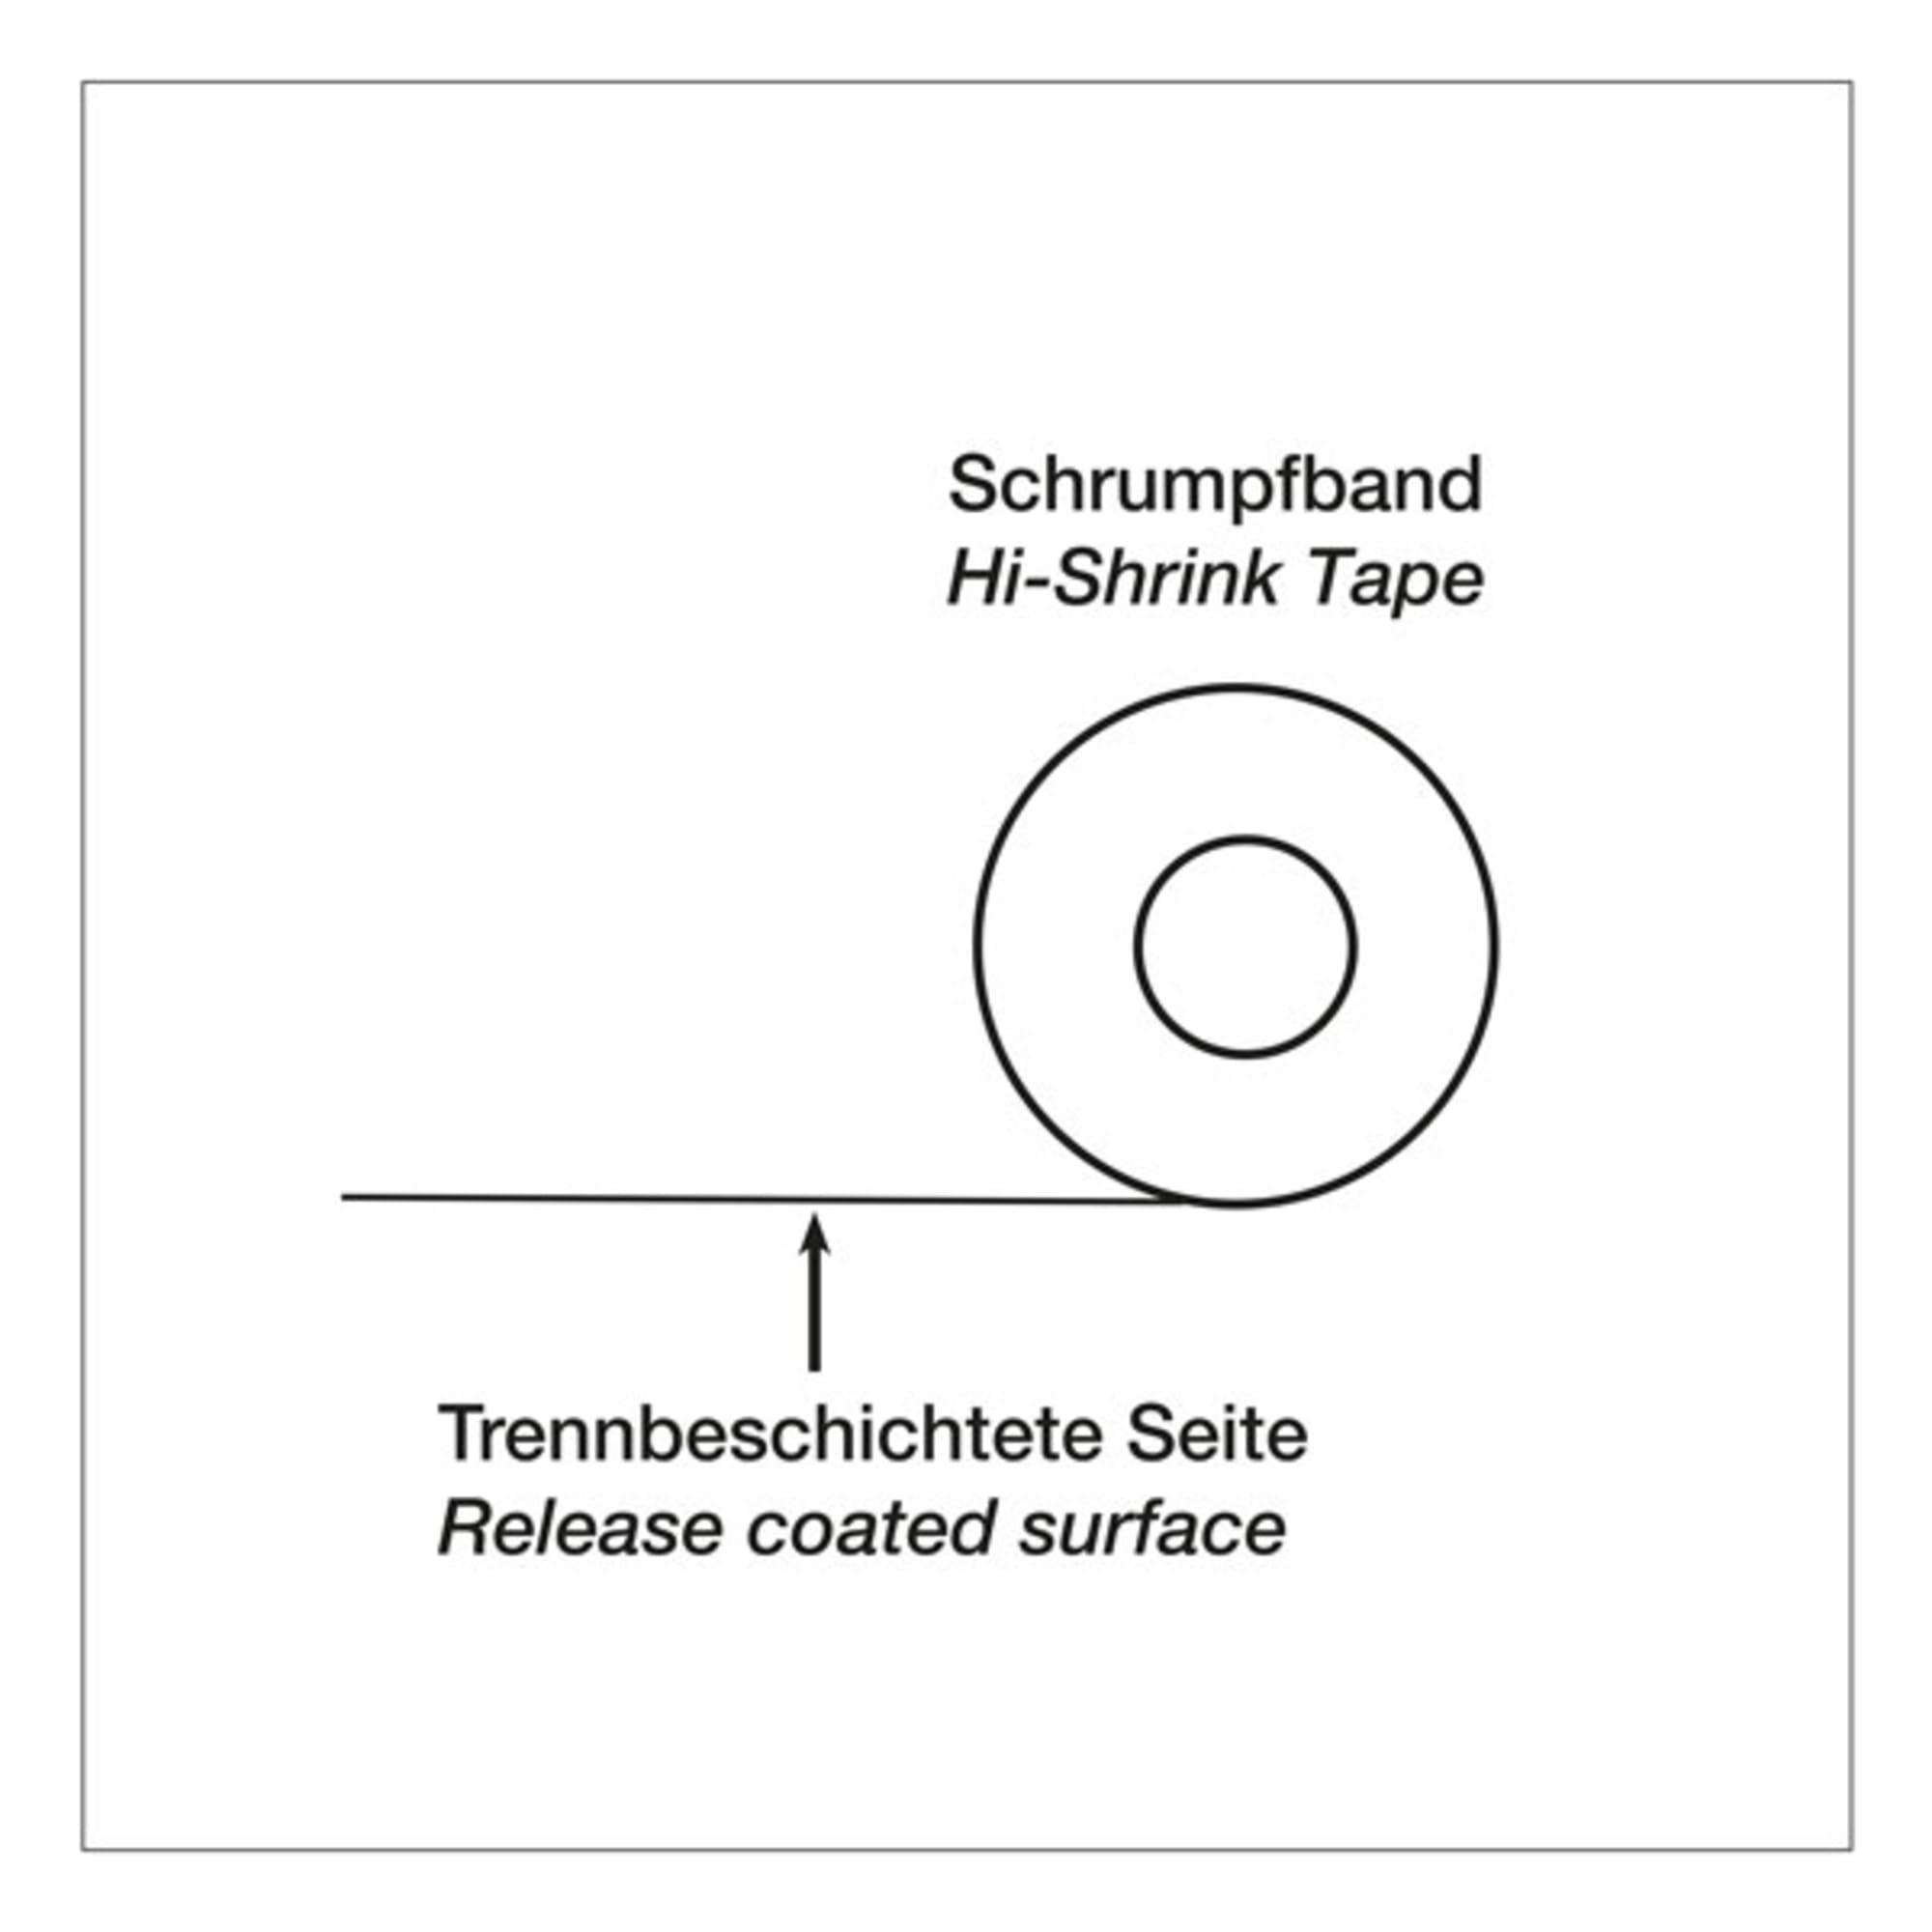 Hi-Shrink tape perforated 1" + 2.5"/ 91.4 m, image 3